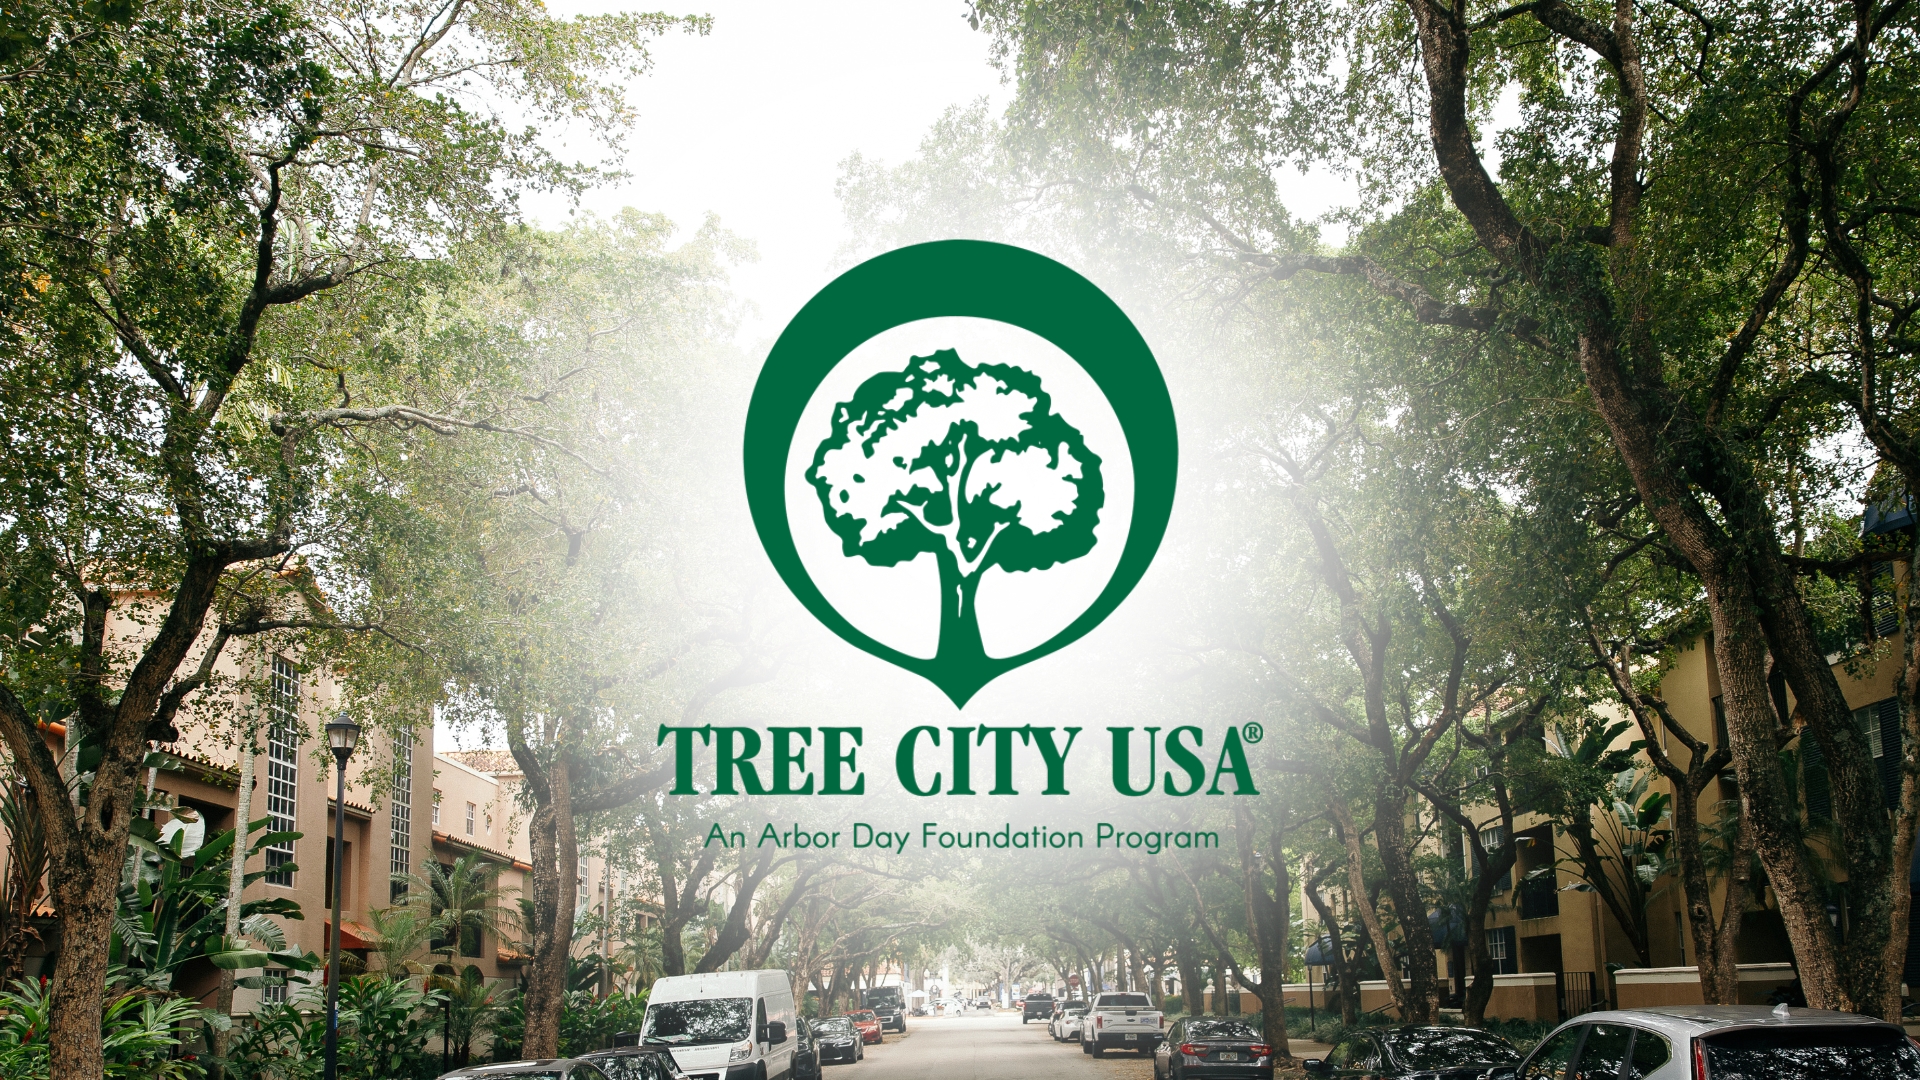 Miami Lakes Celebrates 17 Years of Tree City USA Designation